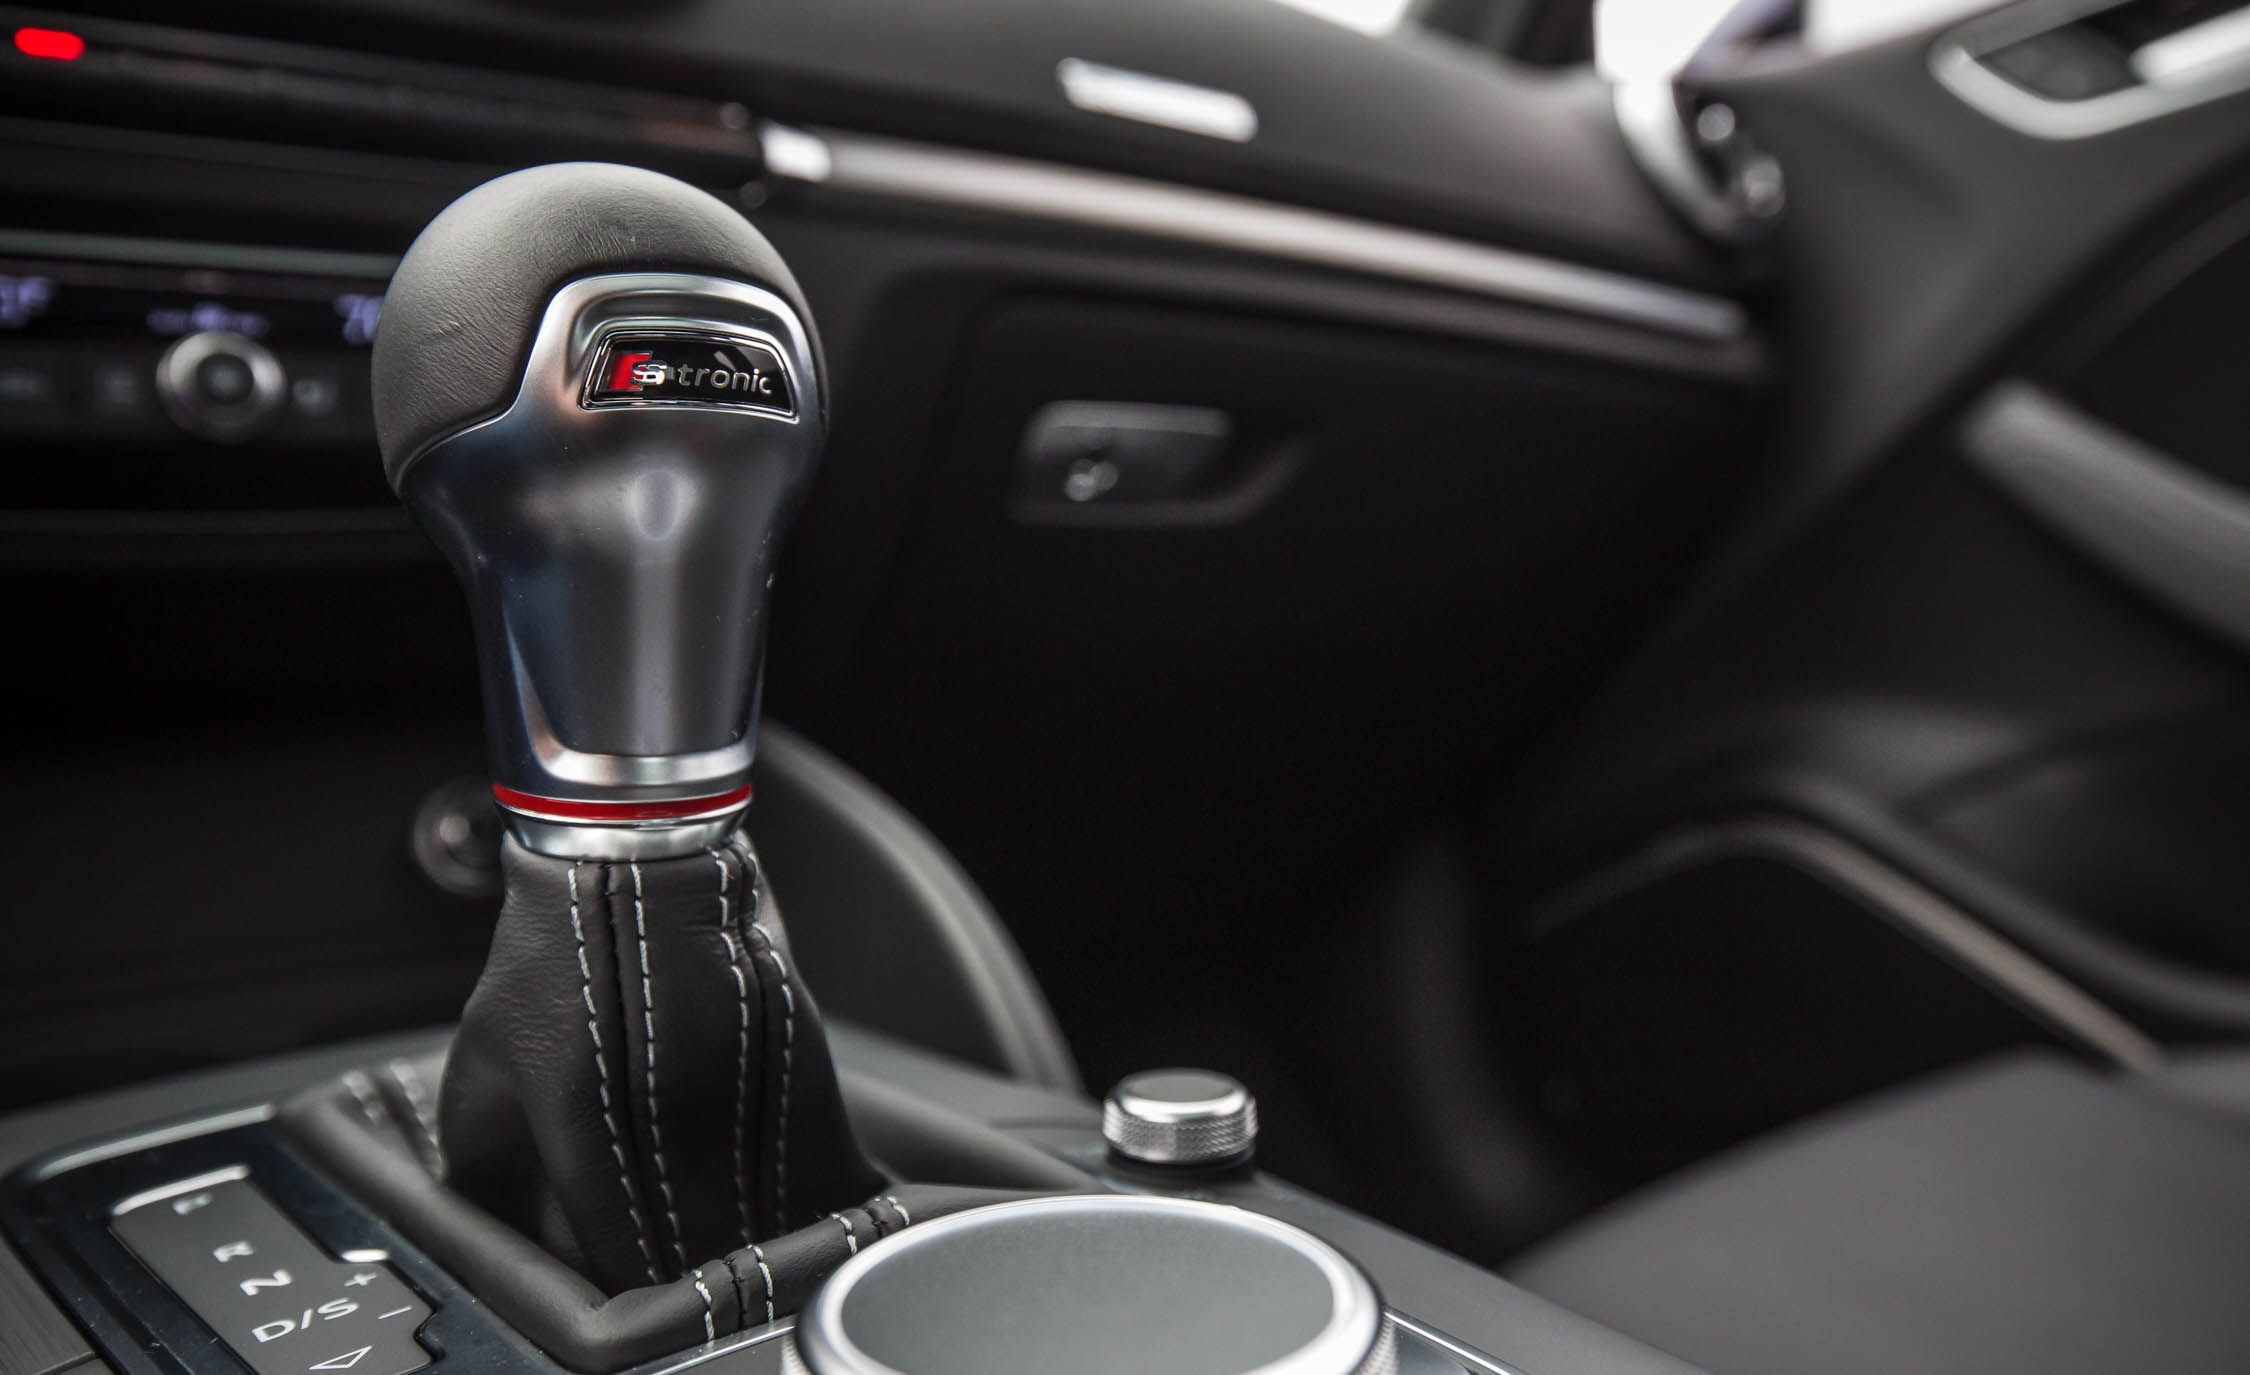 2017 Audi S3 Interior View Gear Shift Knob (View 15 of 50)